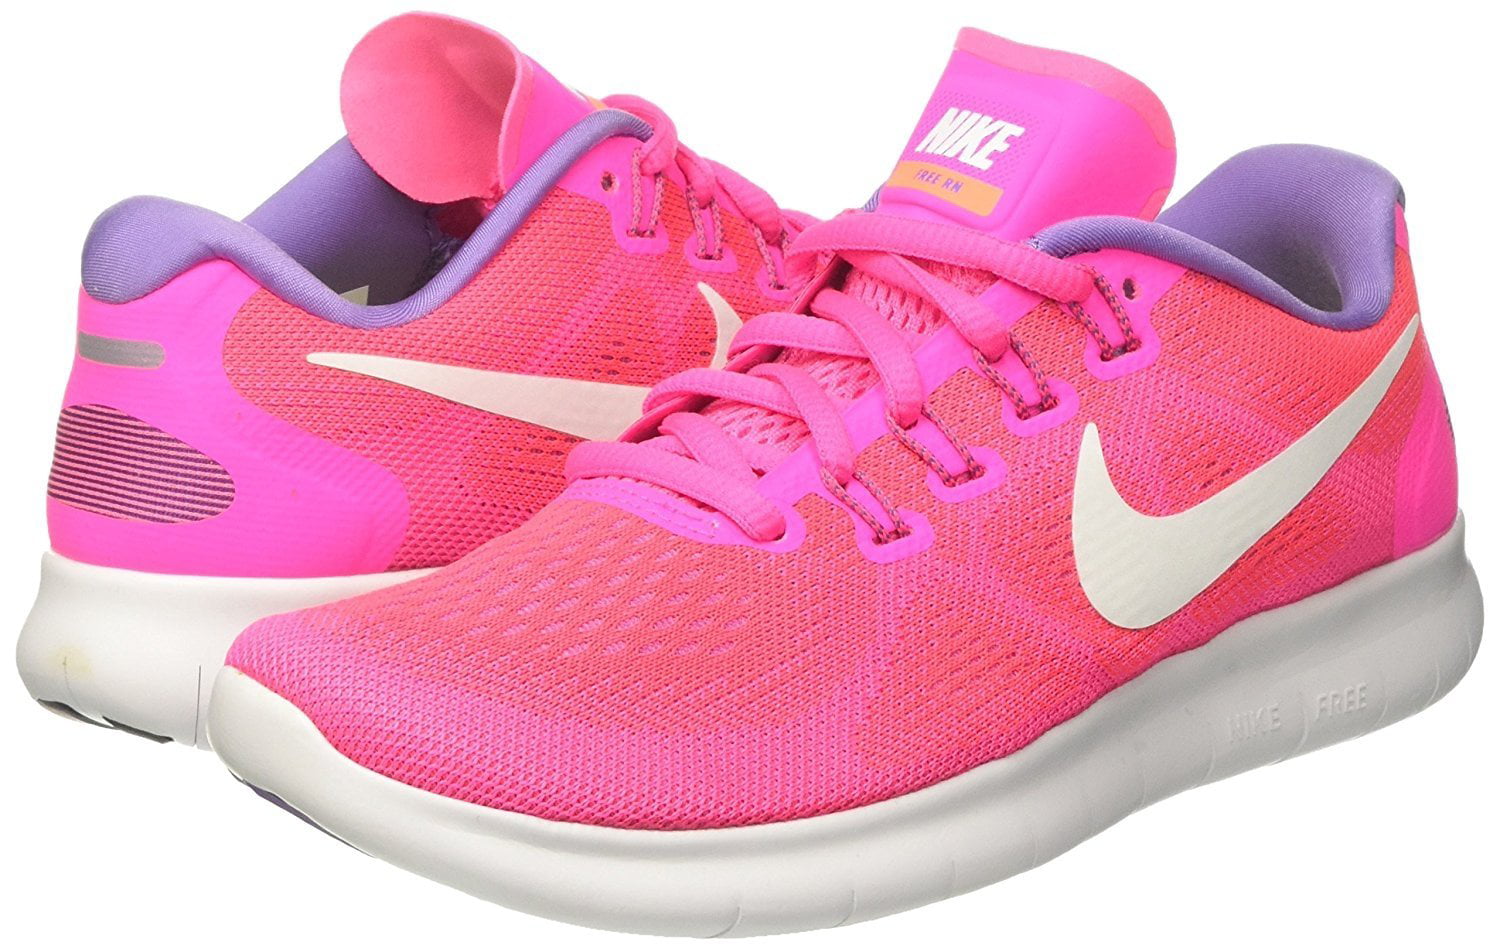 Comparar casado sitio Nike Women's Free RN 2017 Running Shoes - Walmart.com